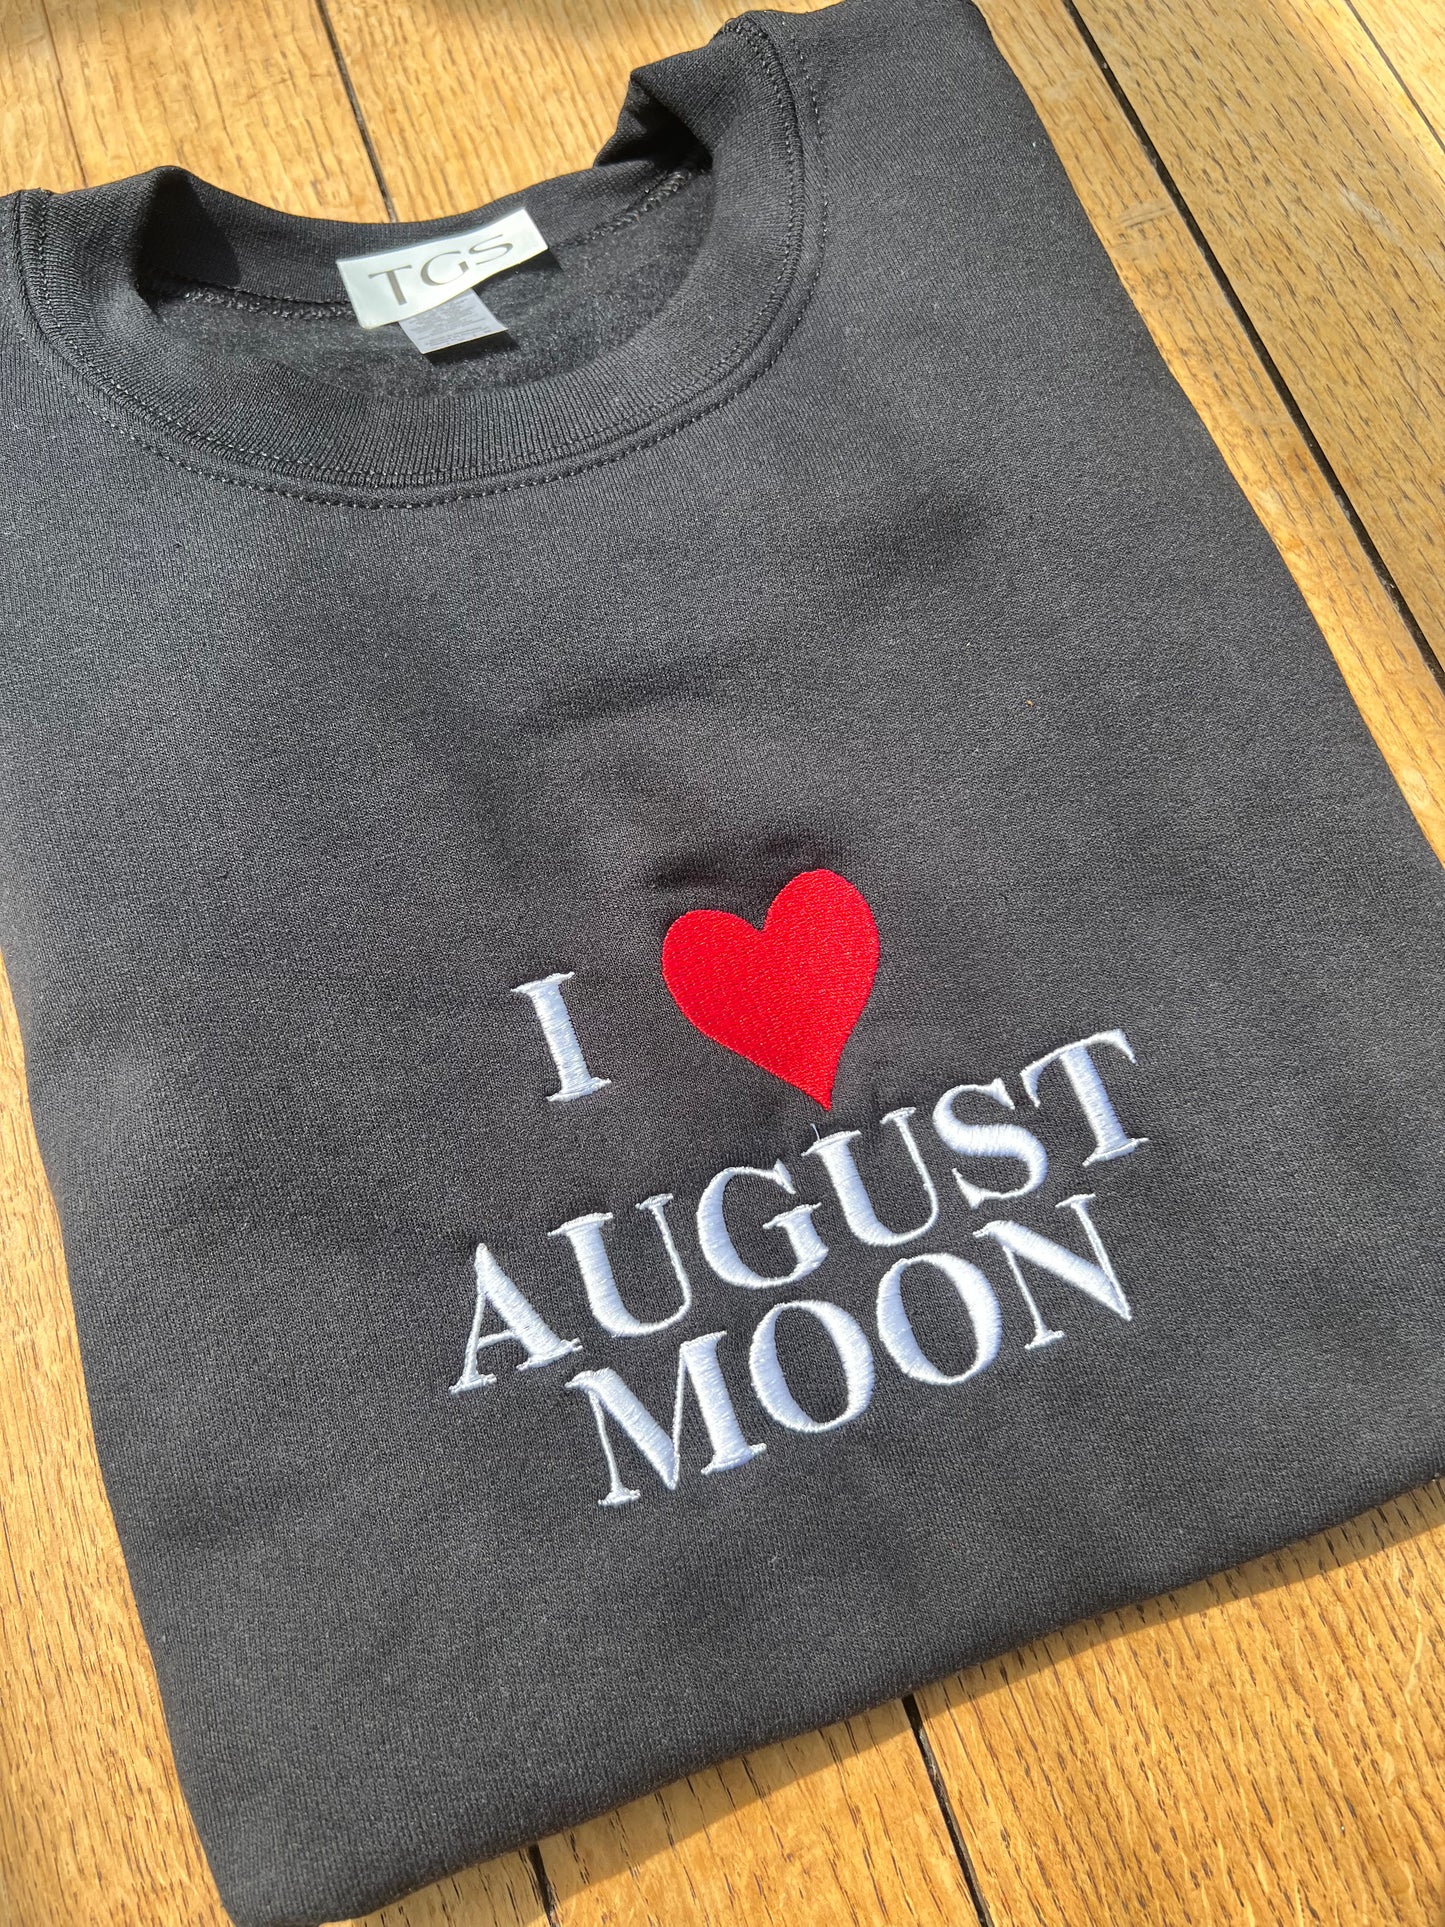 I Love August Moon